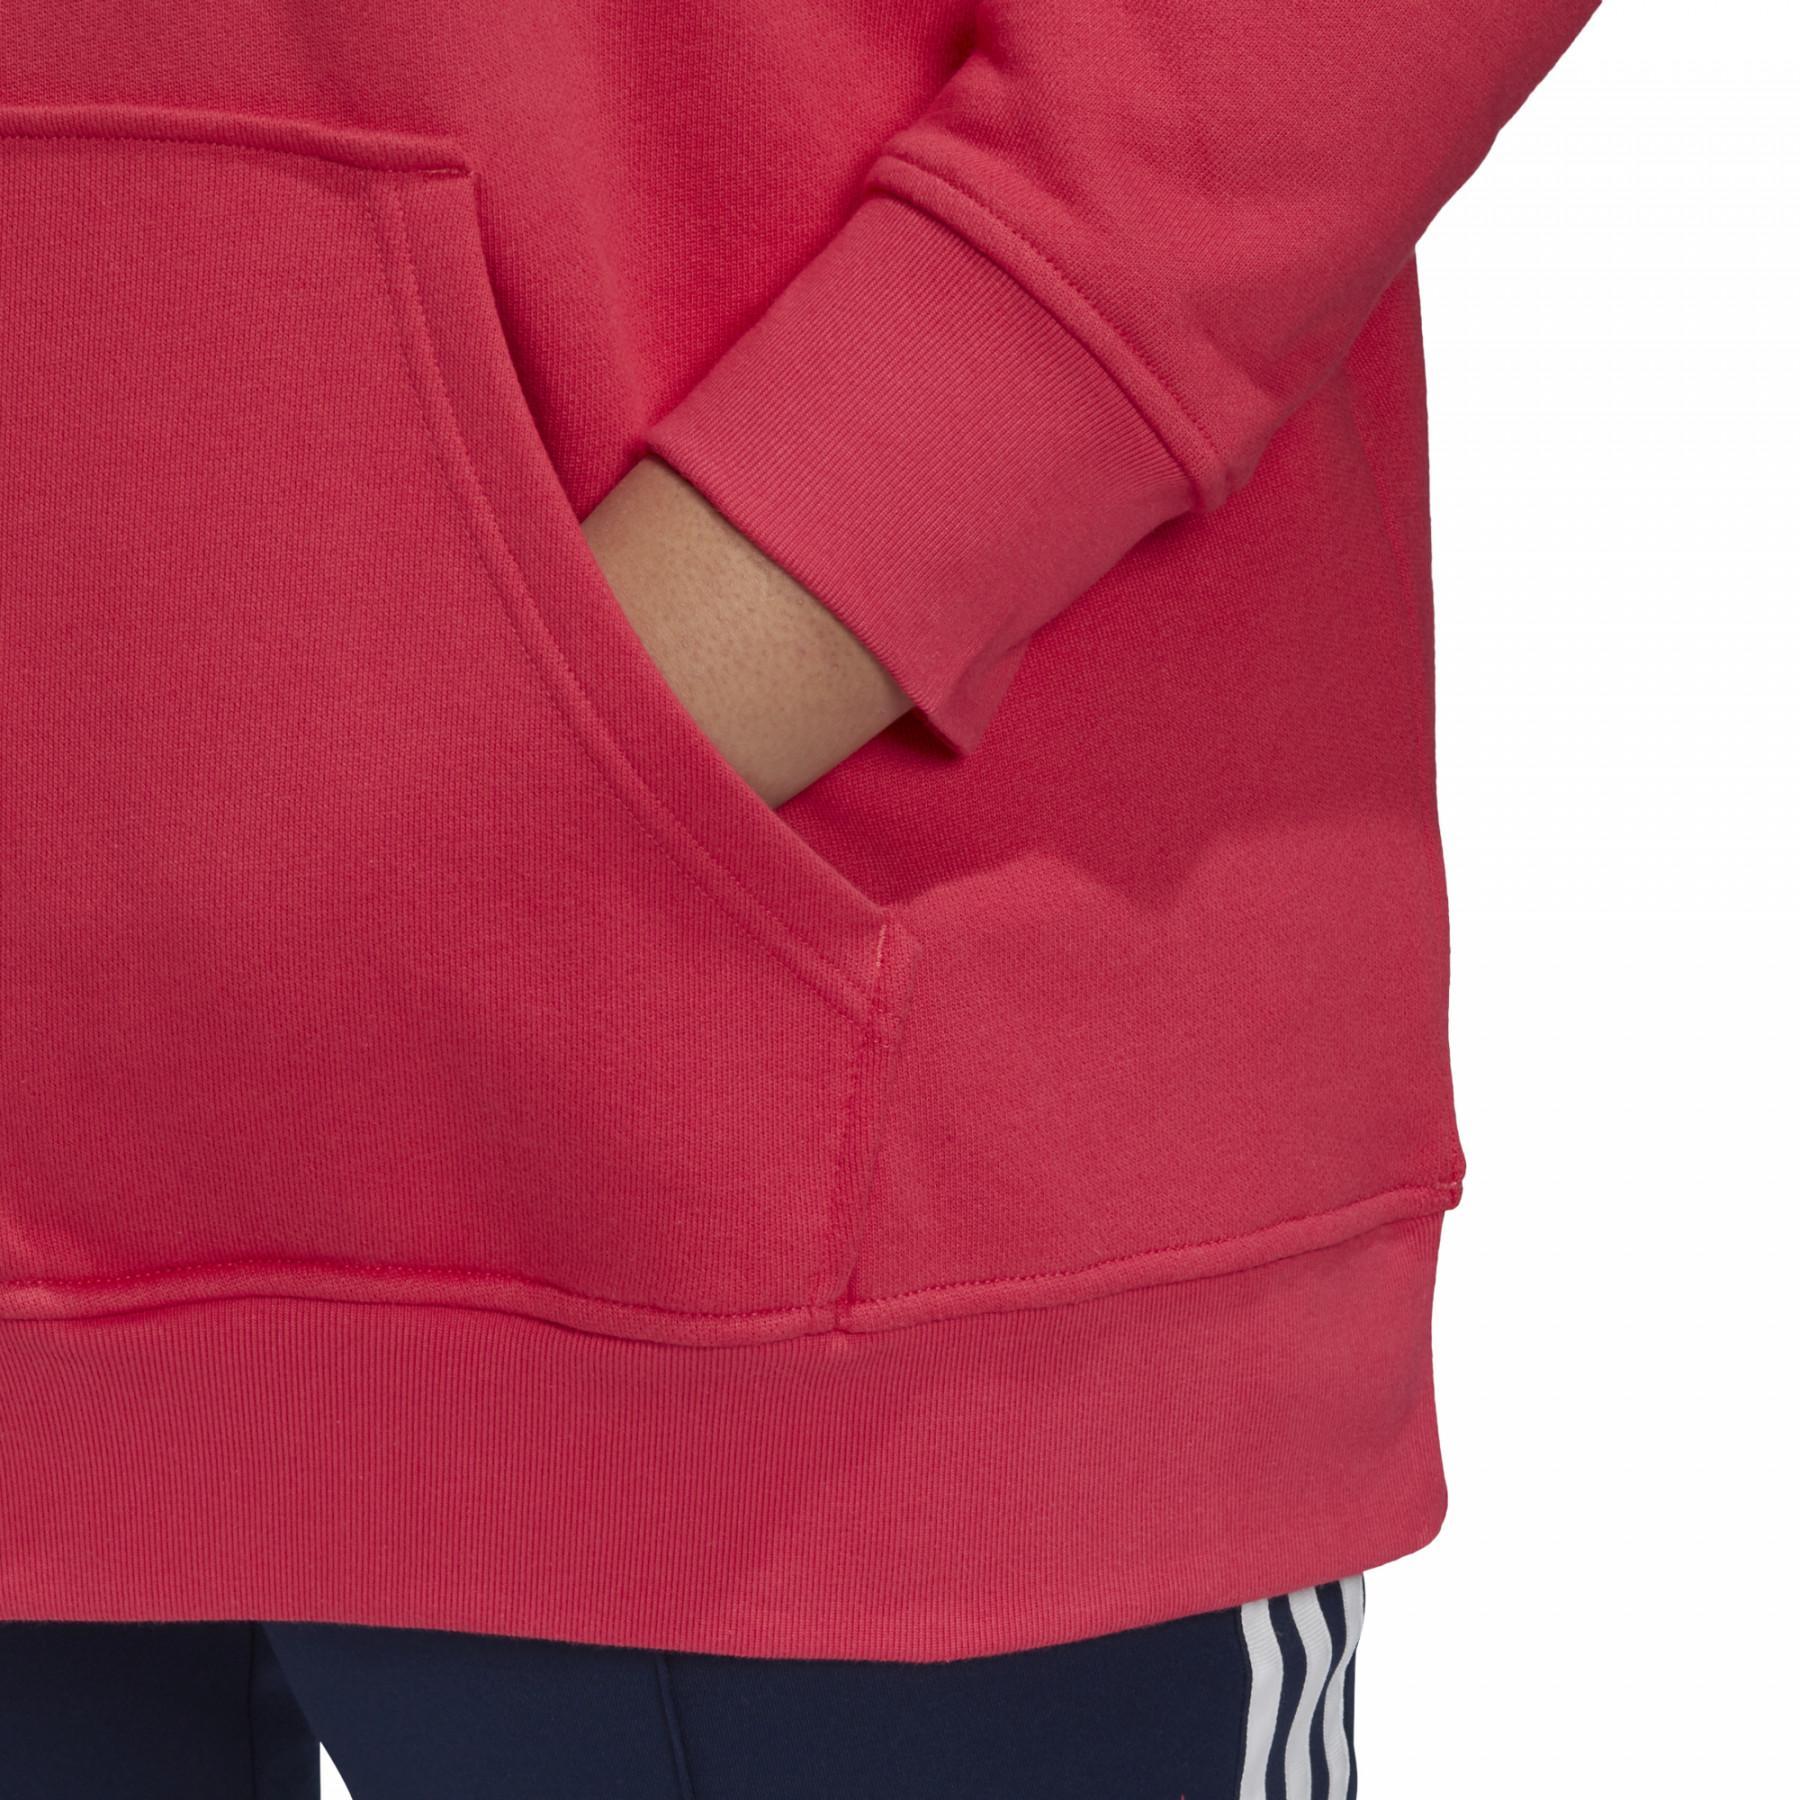 Women's hooded sweatshirt adidas Originals Trefoil- large sizes